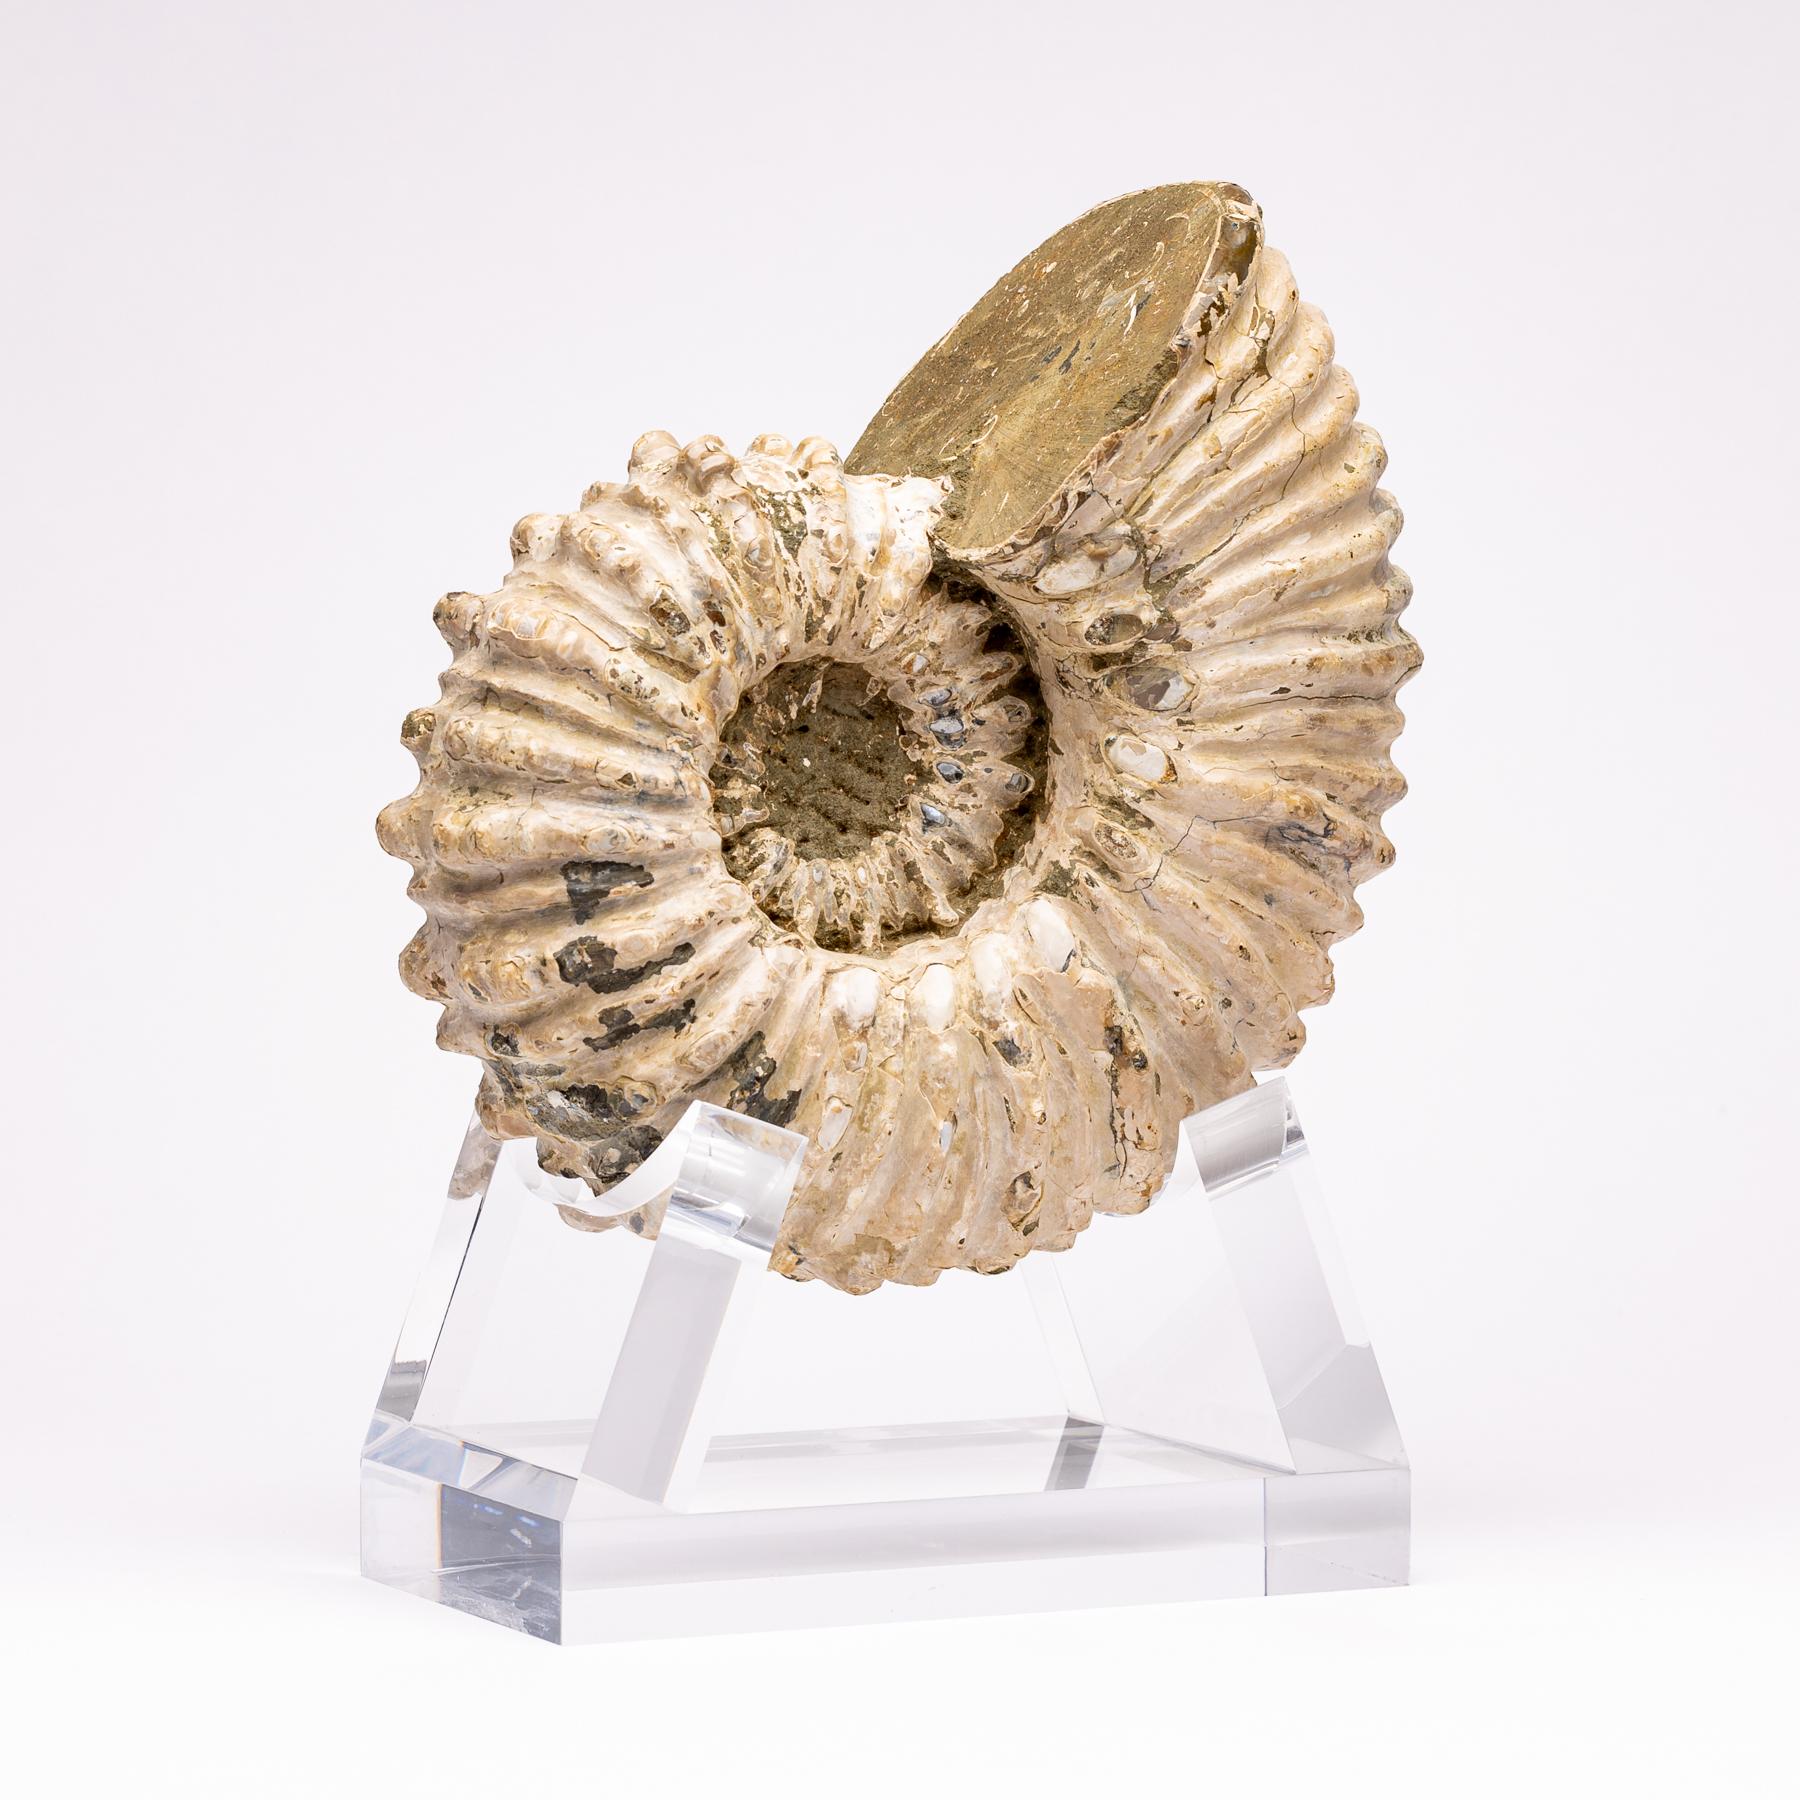 Organic Modern Madagascar Douvilleiceras Ammonite Fossil on Acrylic Base, Cretaceous Period